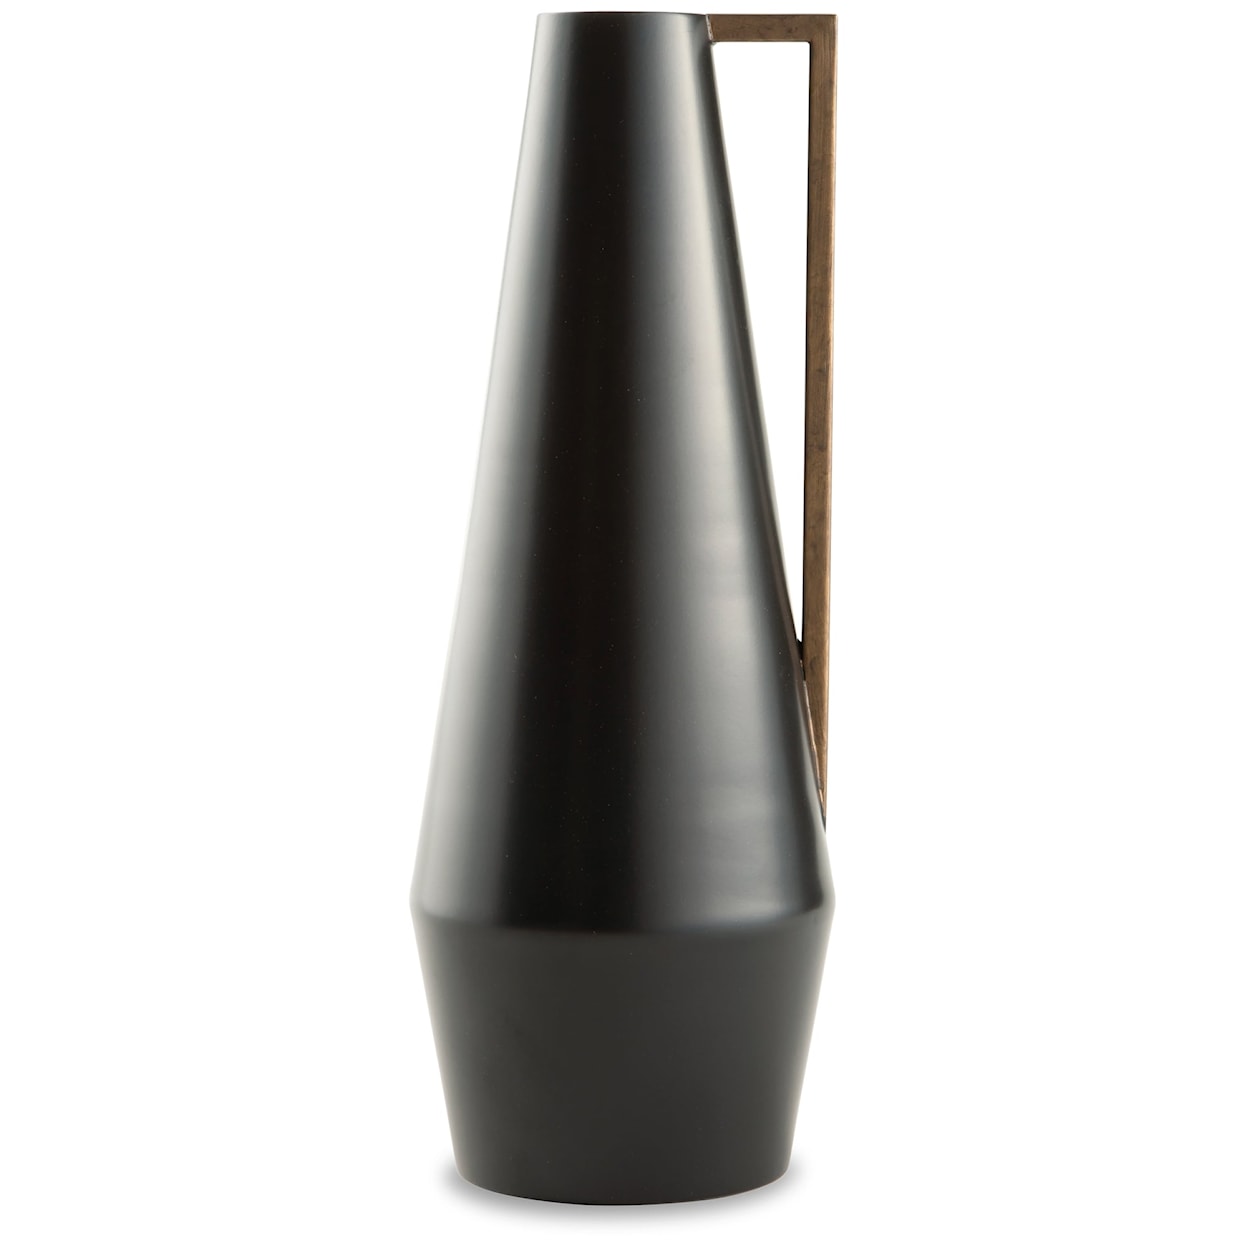 Ashley Furniture Signature Design Pouderbell Vase